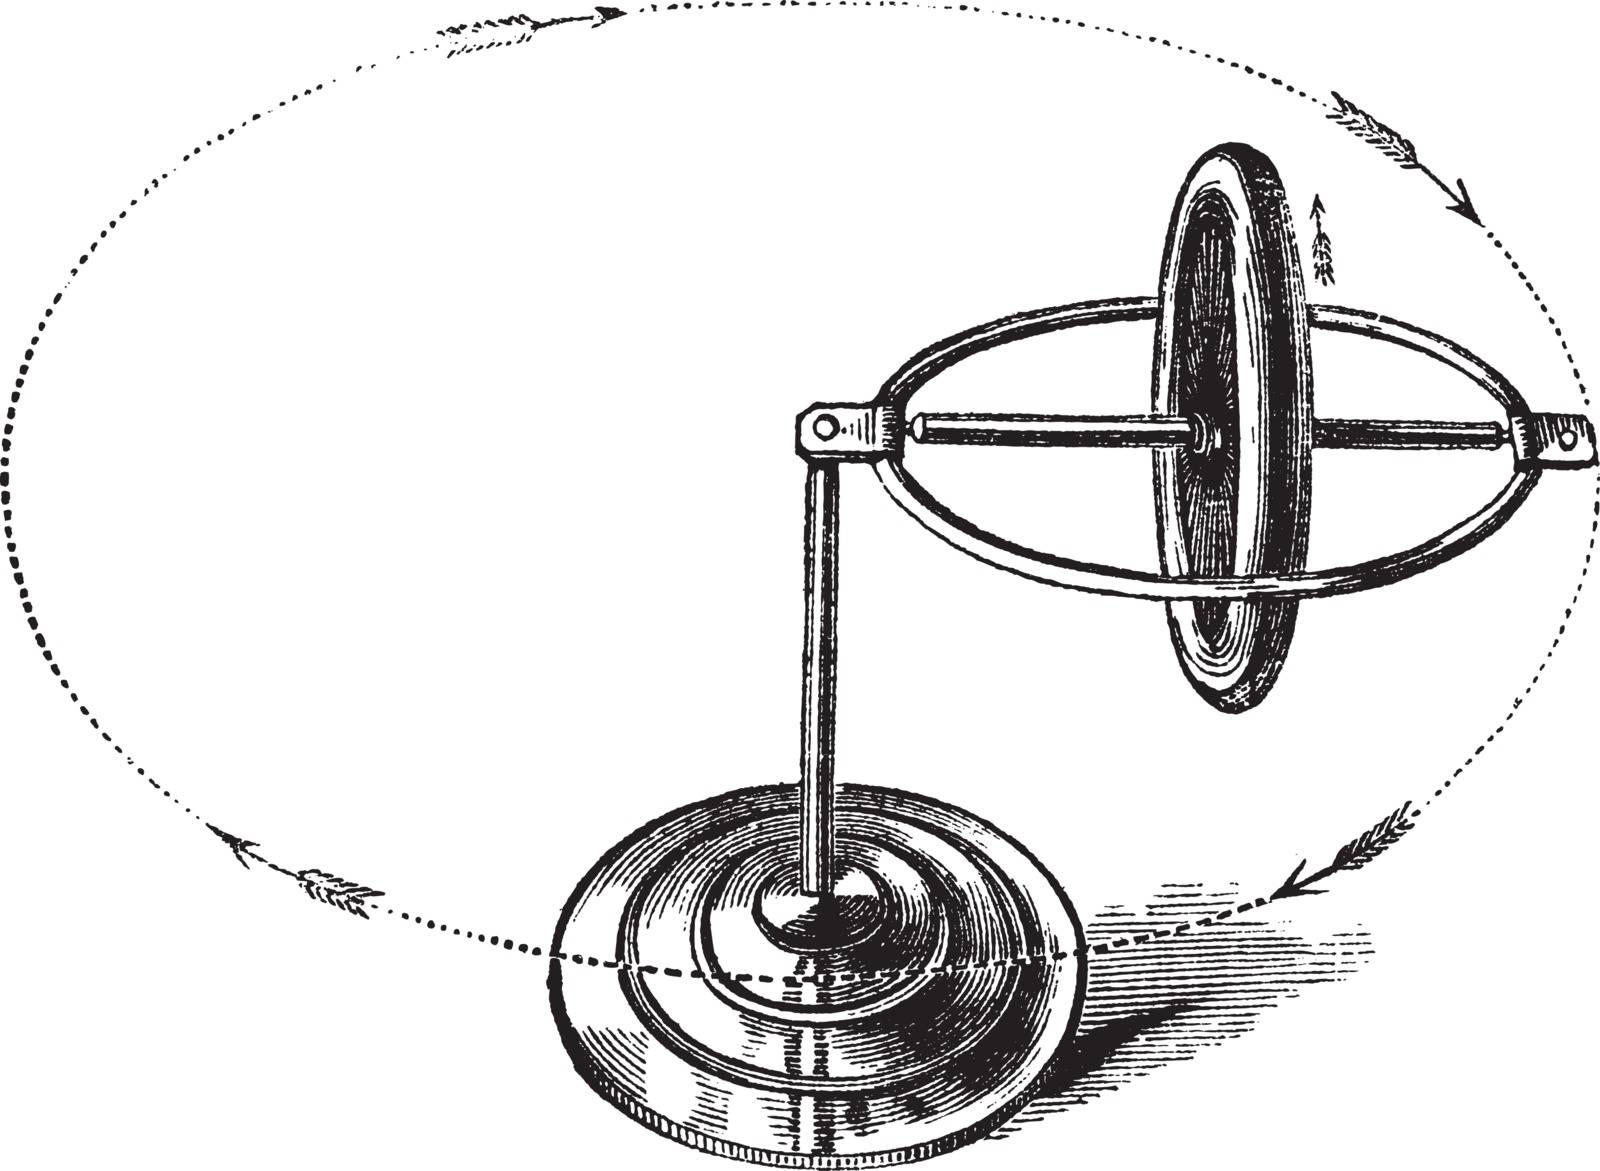 Gyroscope vintage engraving.Old engraved illustration of gyroscope.